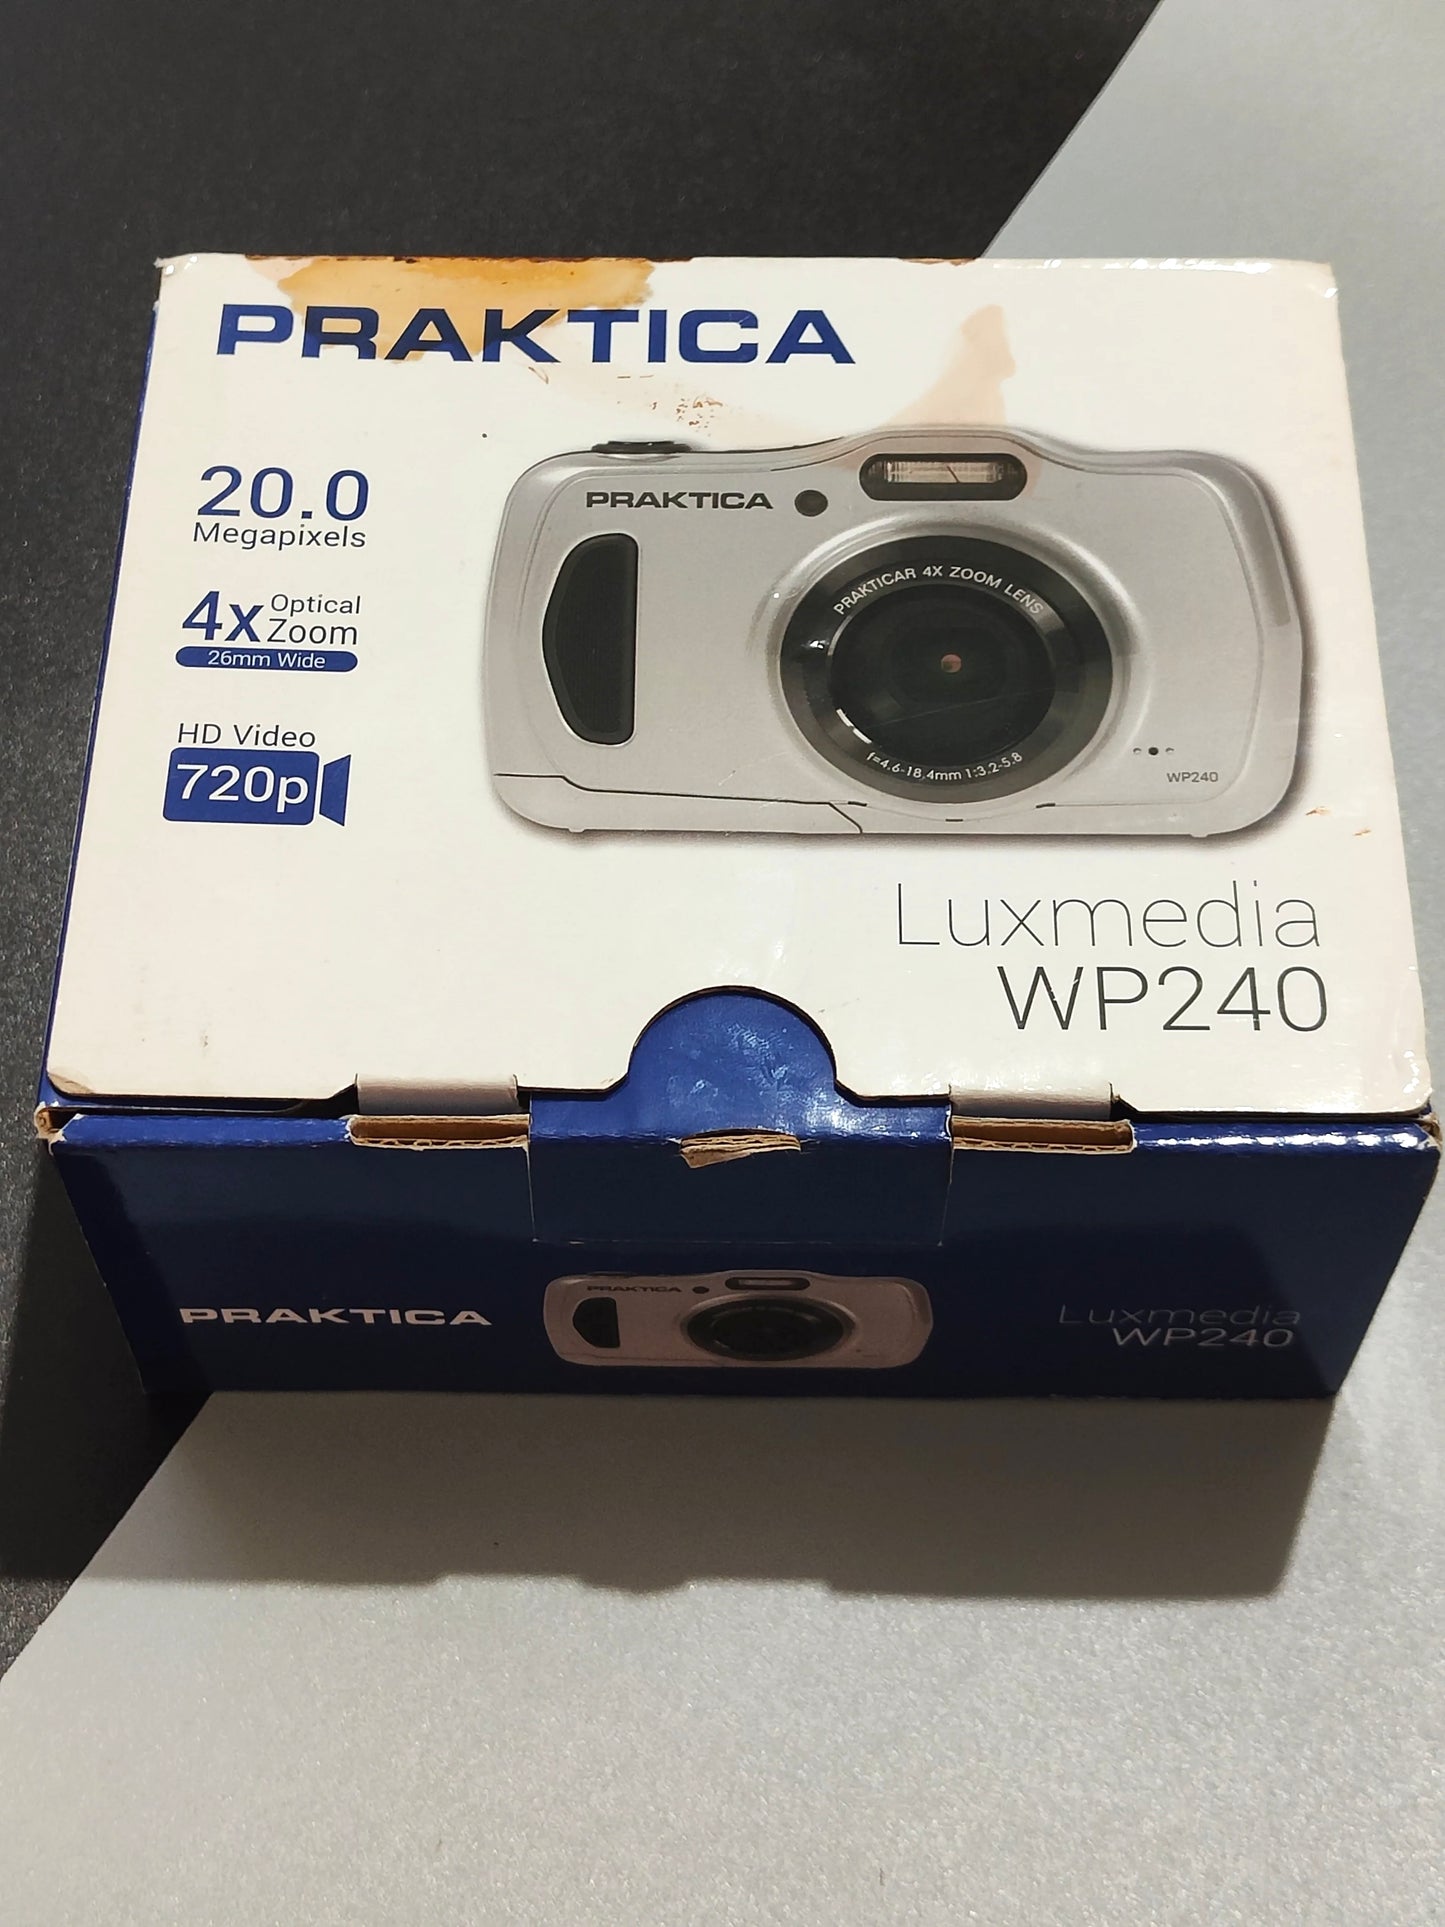 Praktica PRA099 Luxmedia WP240 Waterproof Digital Compact Camera - Blue (20 MP,4x Optical Zoom) in Blue